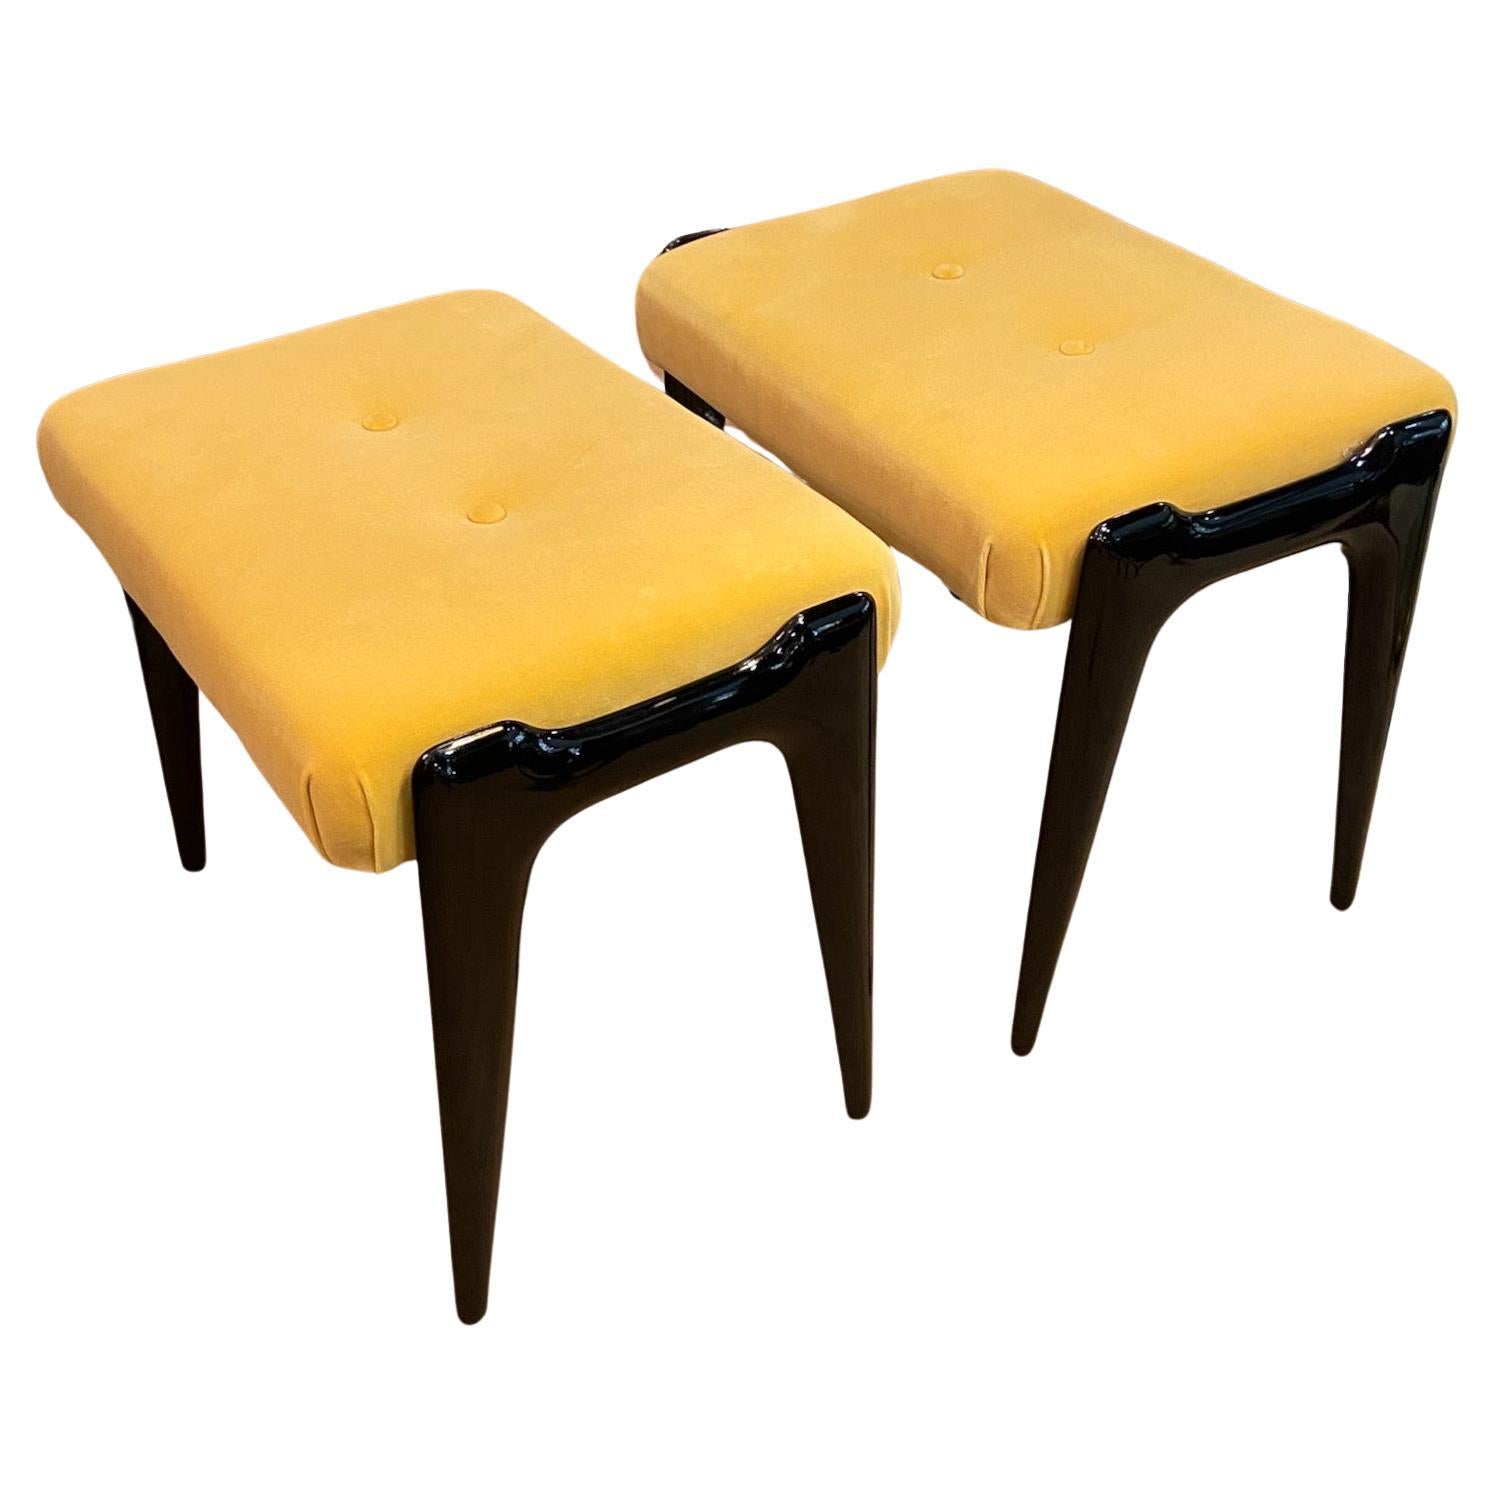 A pair of mid-century Italian stools, yellow velour and ebonized wooden legs